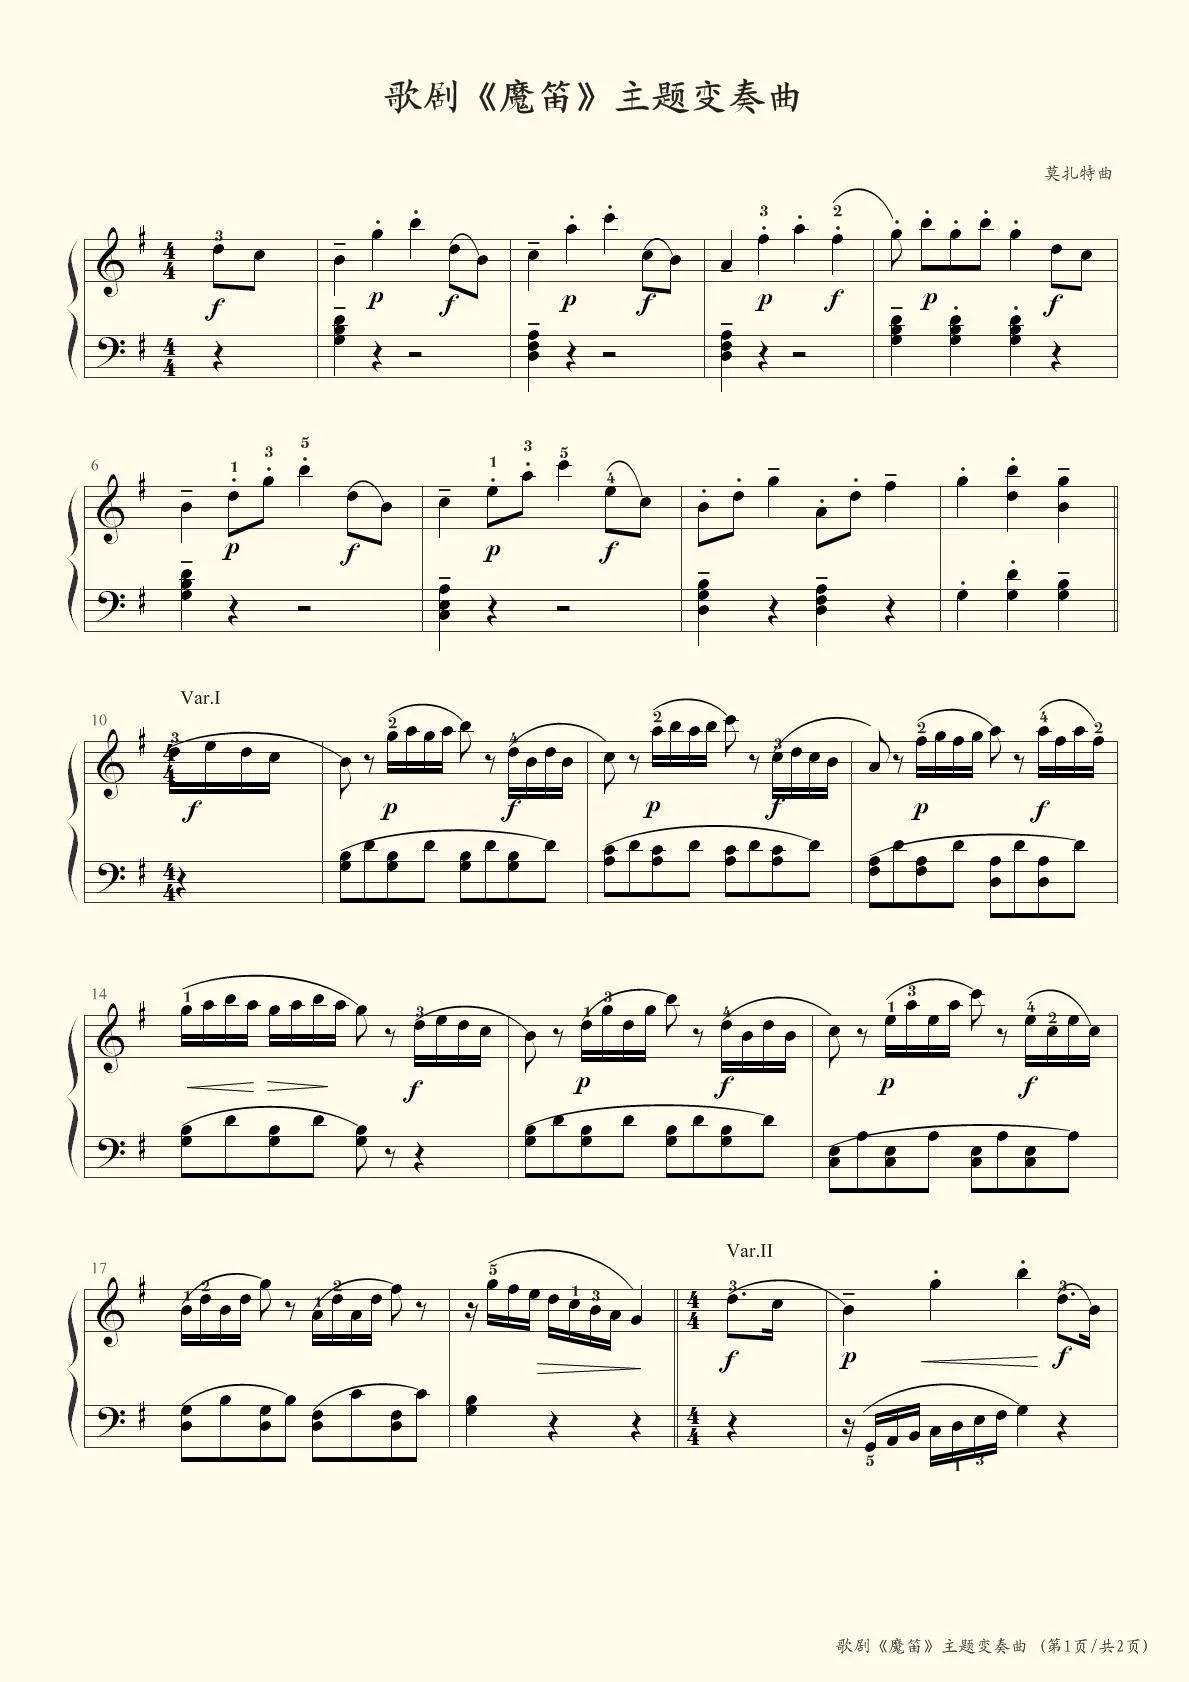 Magic Flute魔笛简谱-莫扎特-歌剧《魔笛》主题变奏曲-看乐谱网